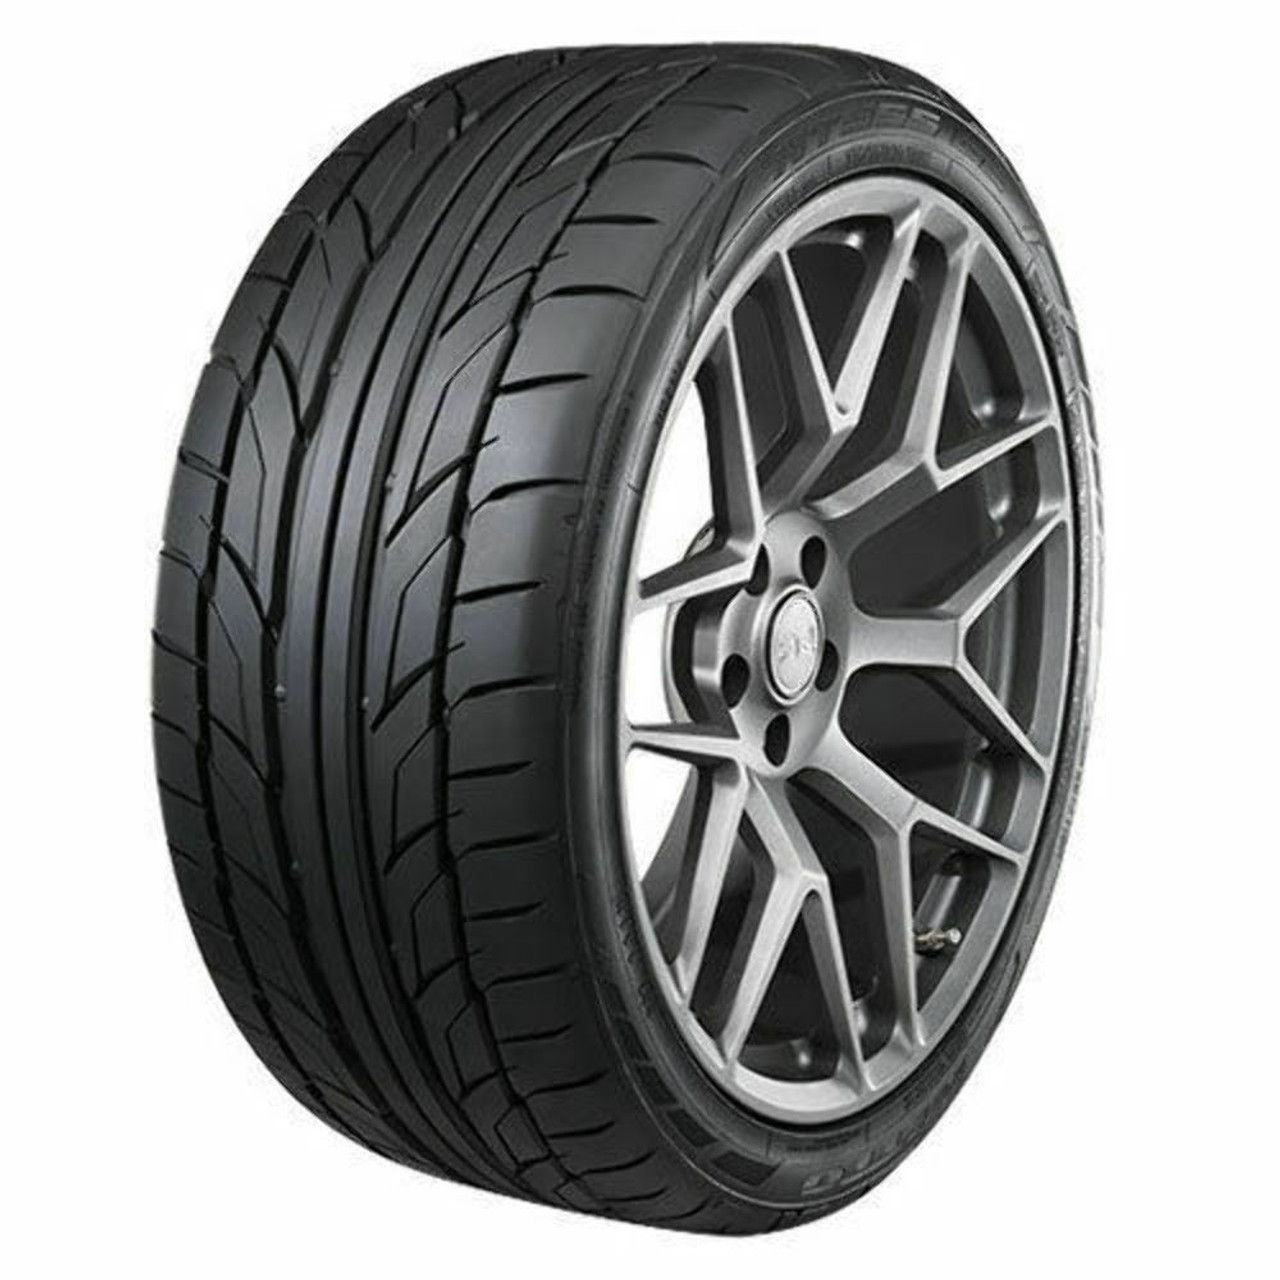 225/40R18 92W XL Nitto NT555 G2 Summer High Performance Tire 25.1 2254018